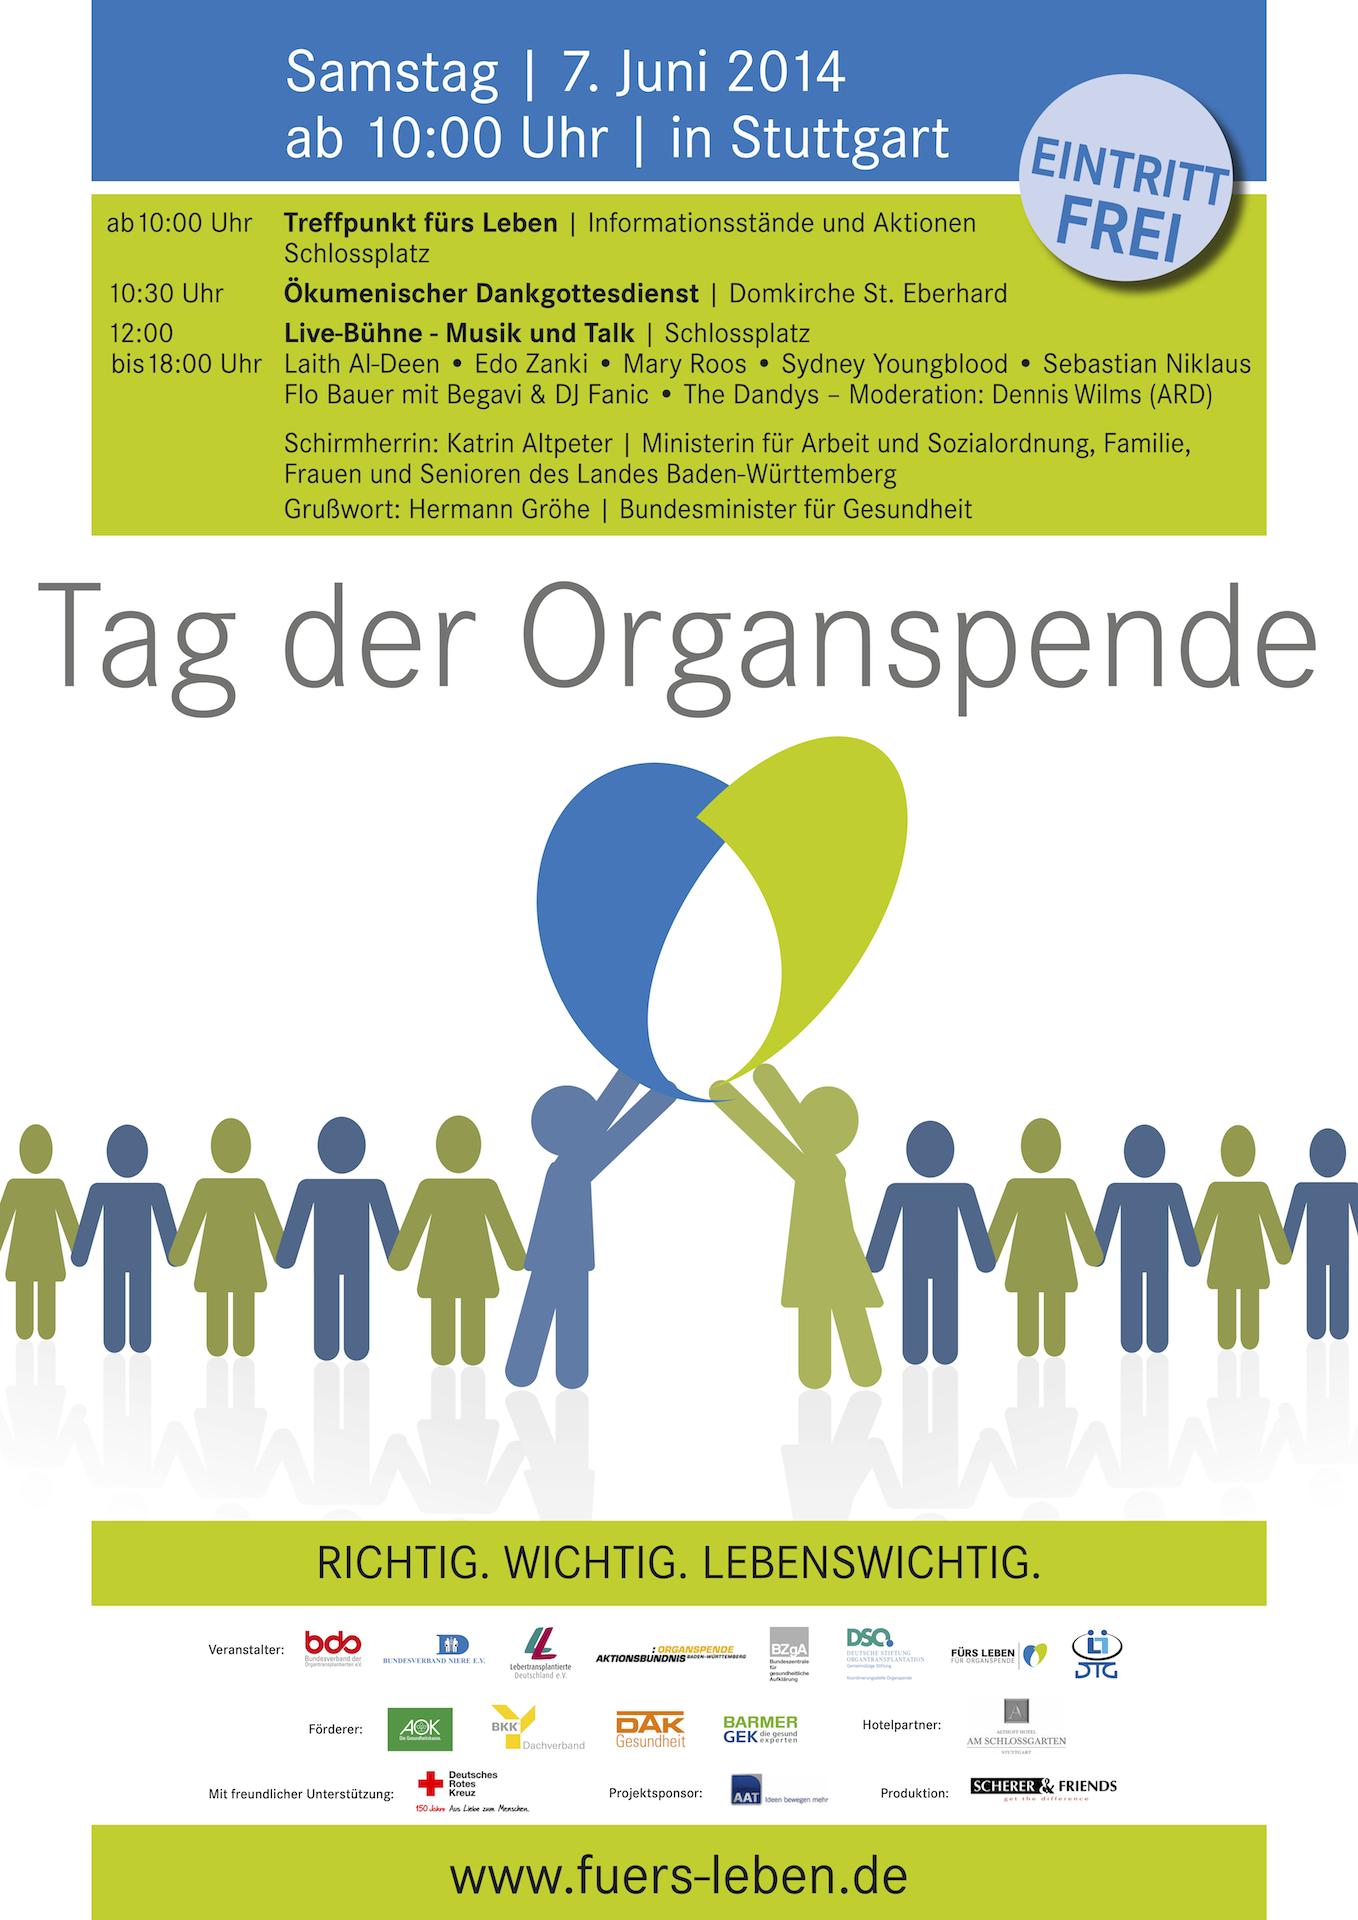 Tag der Organspende am 7. Juni 2014 - Plakat